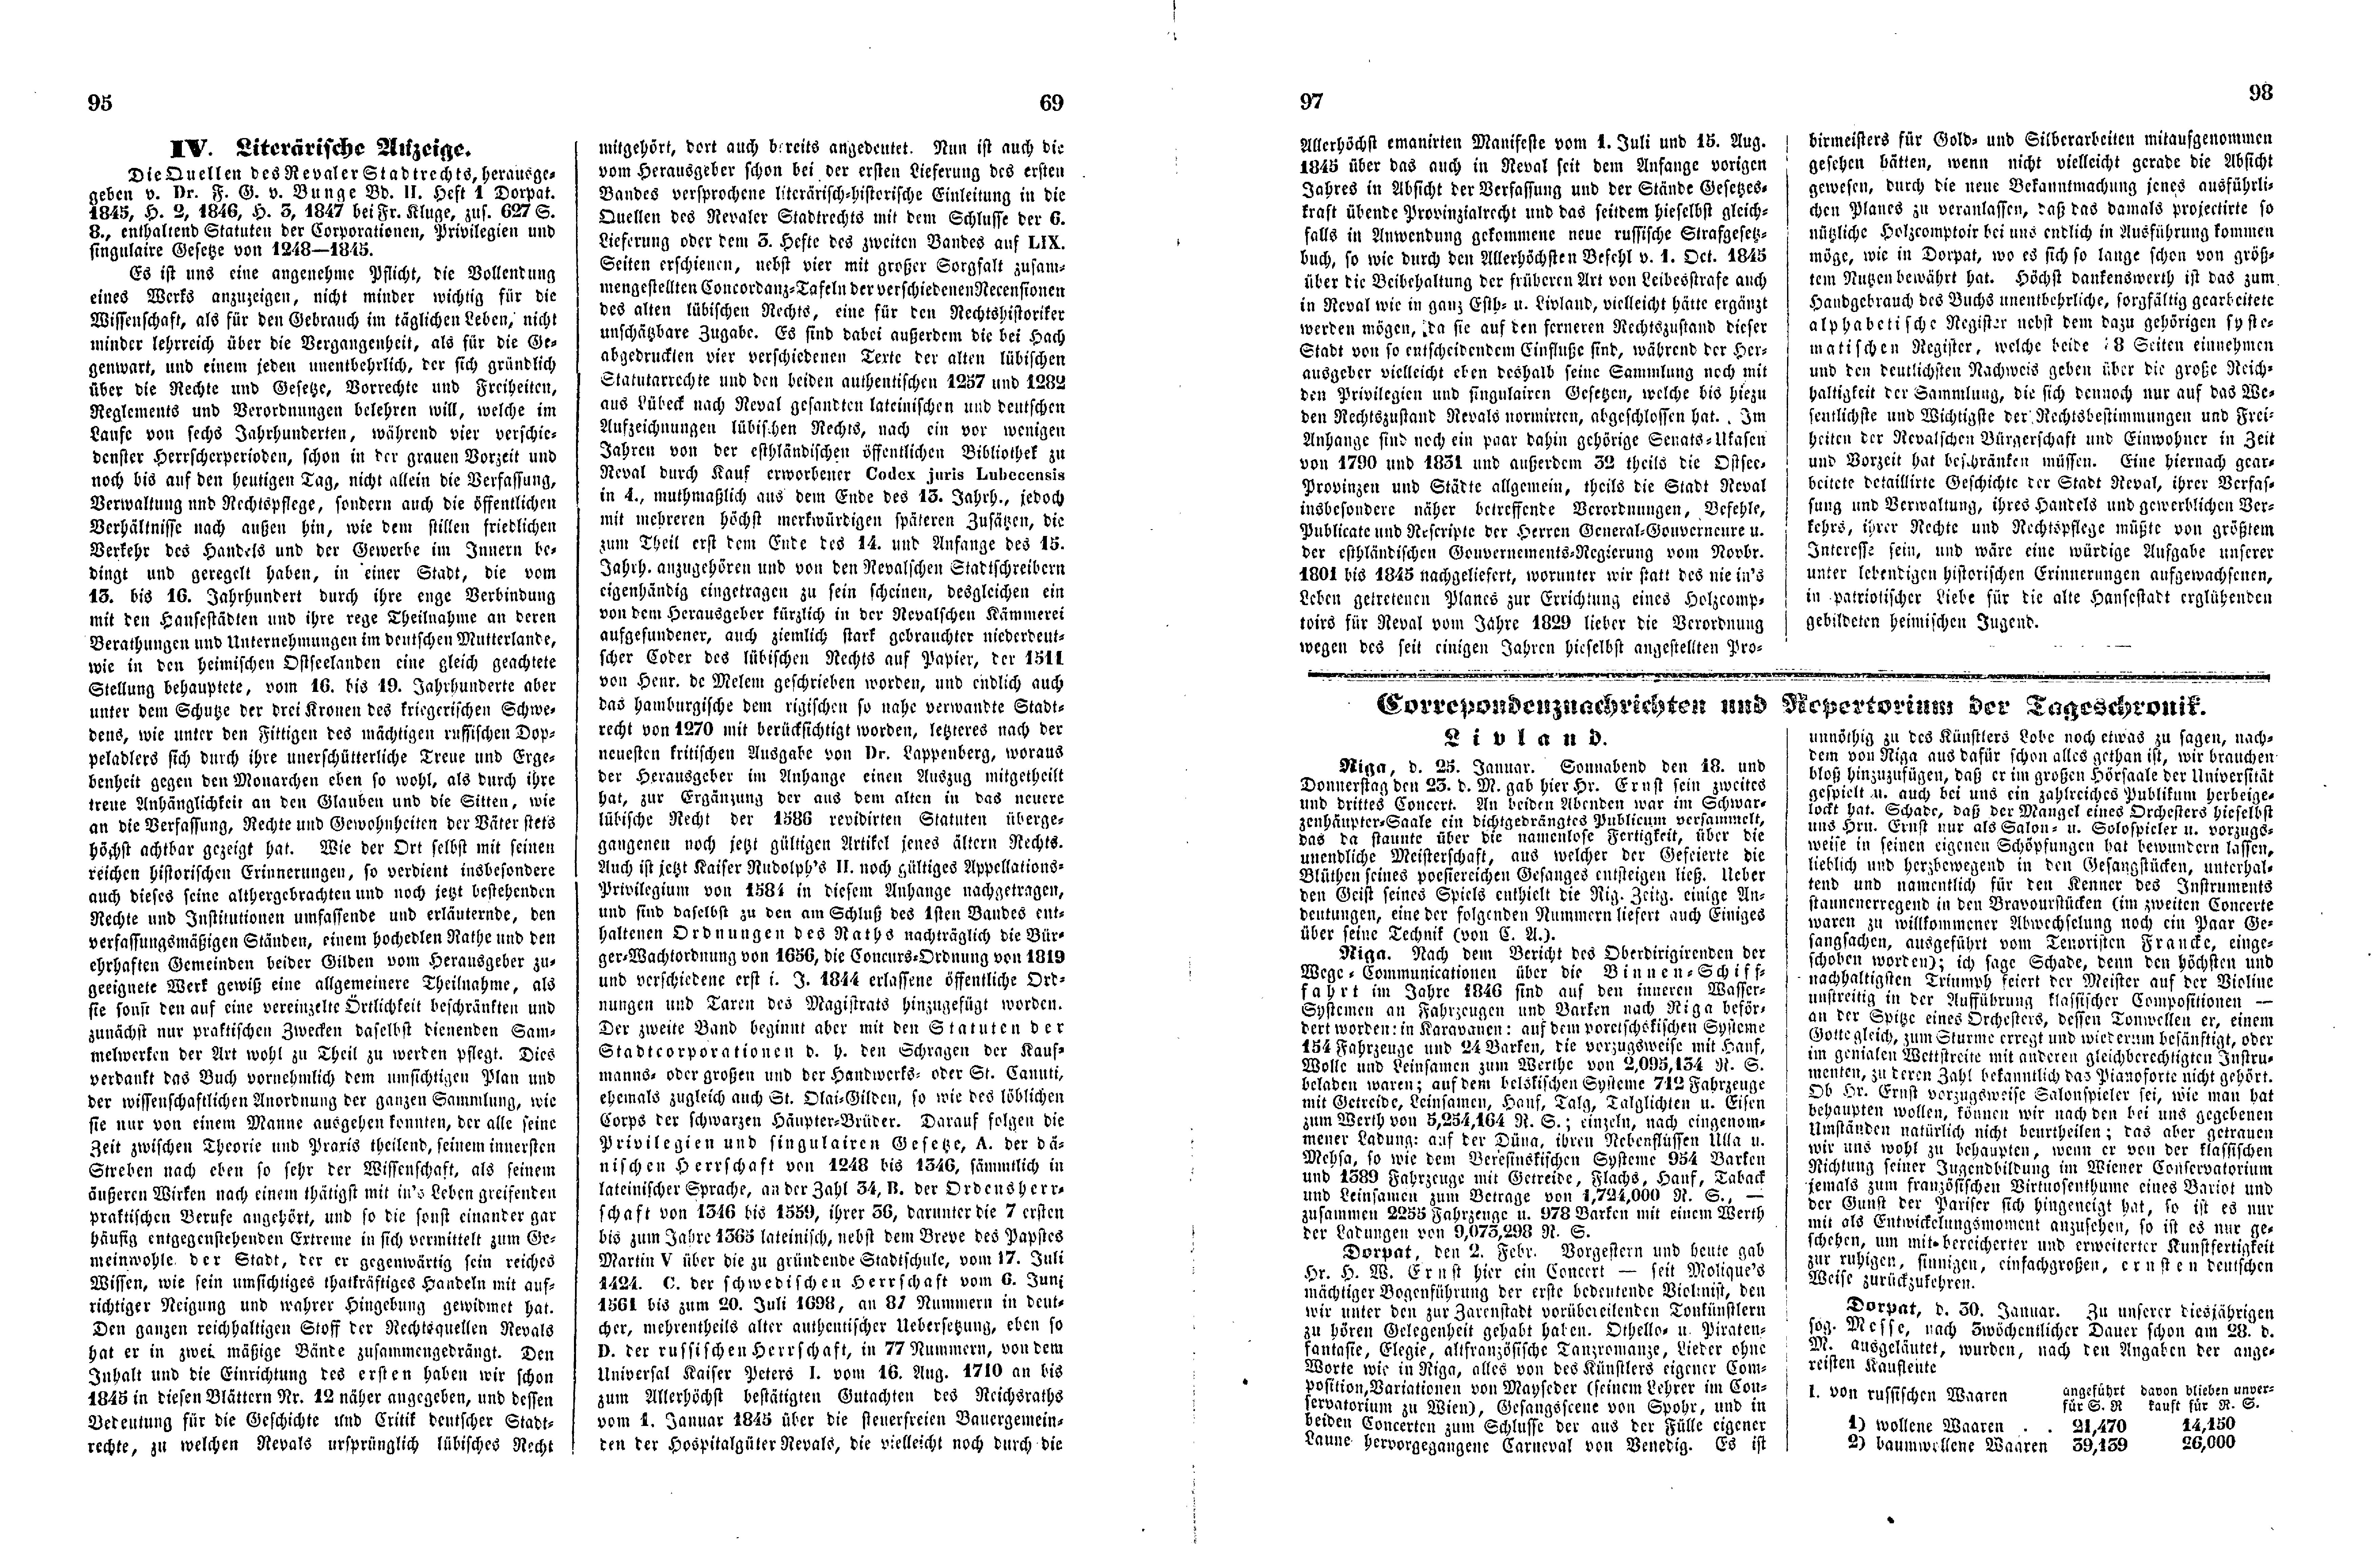 Das Inland [12] (1847) | 29. (95-98) Main body of text